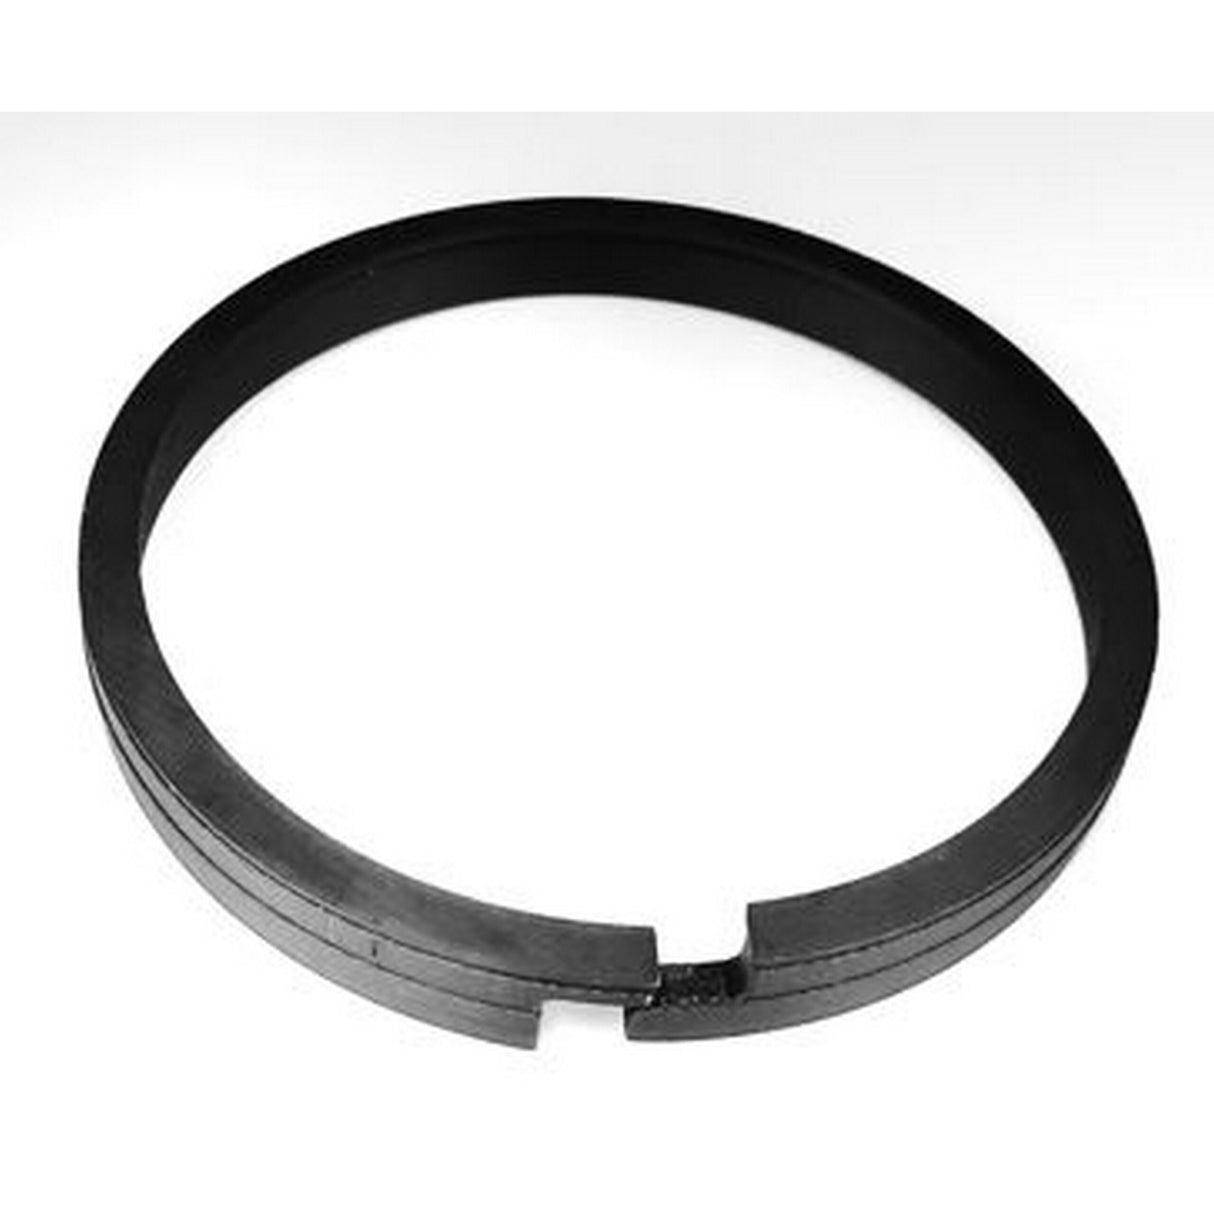 Genustech G-COAR 110 Genus Adapter Ring, 110mm for GPMB